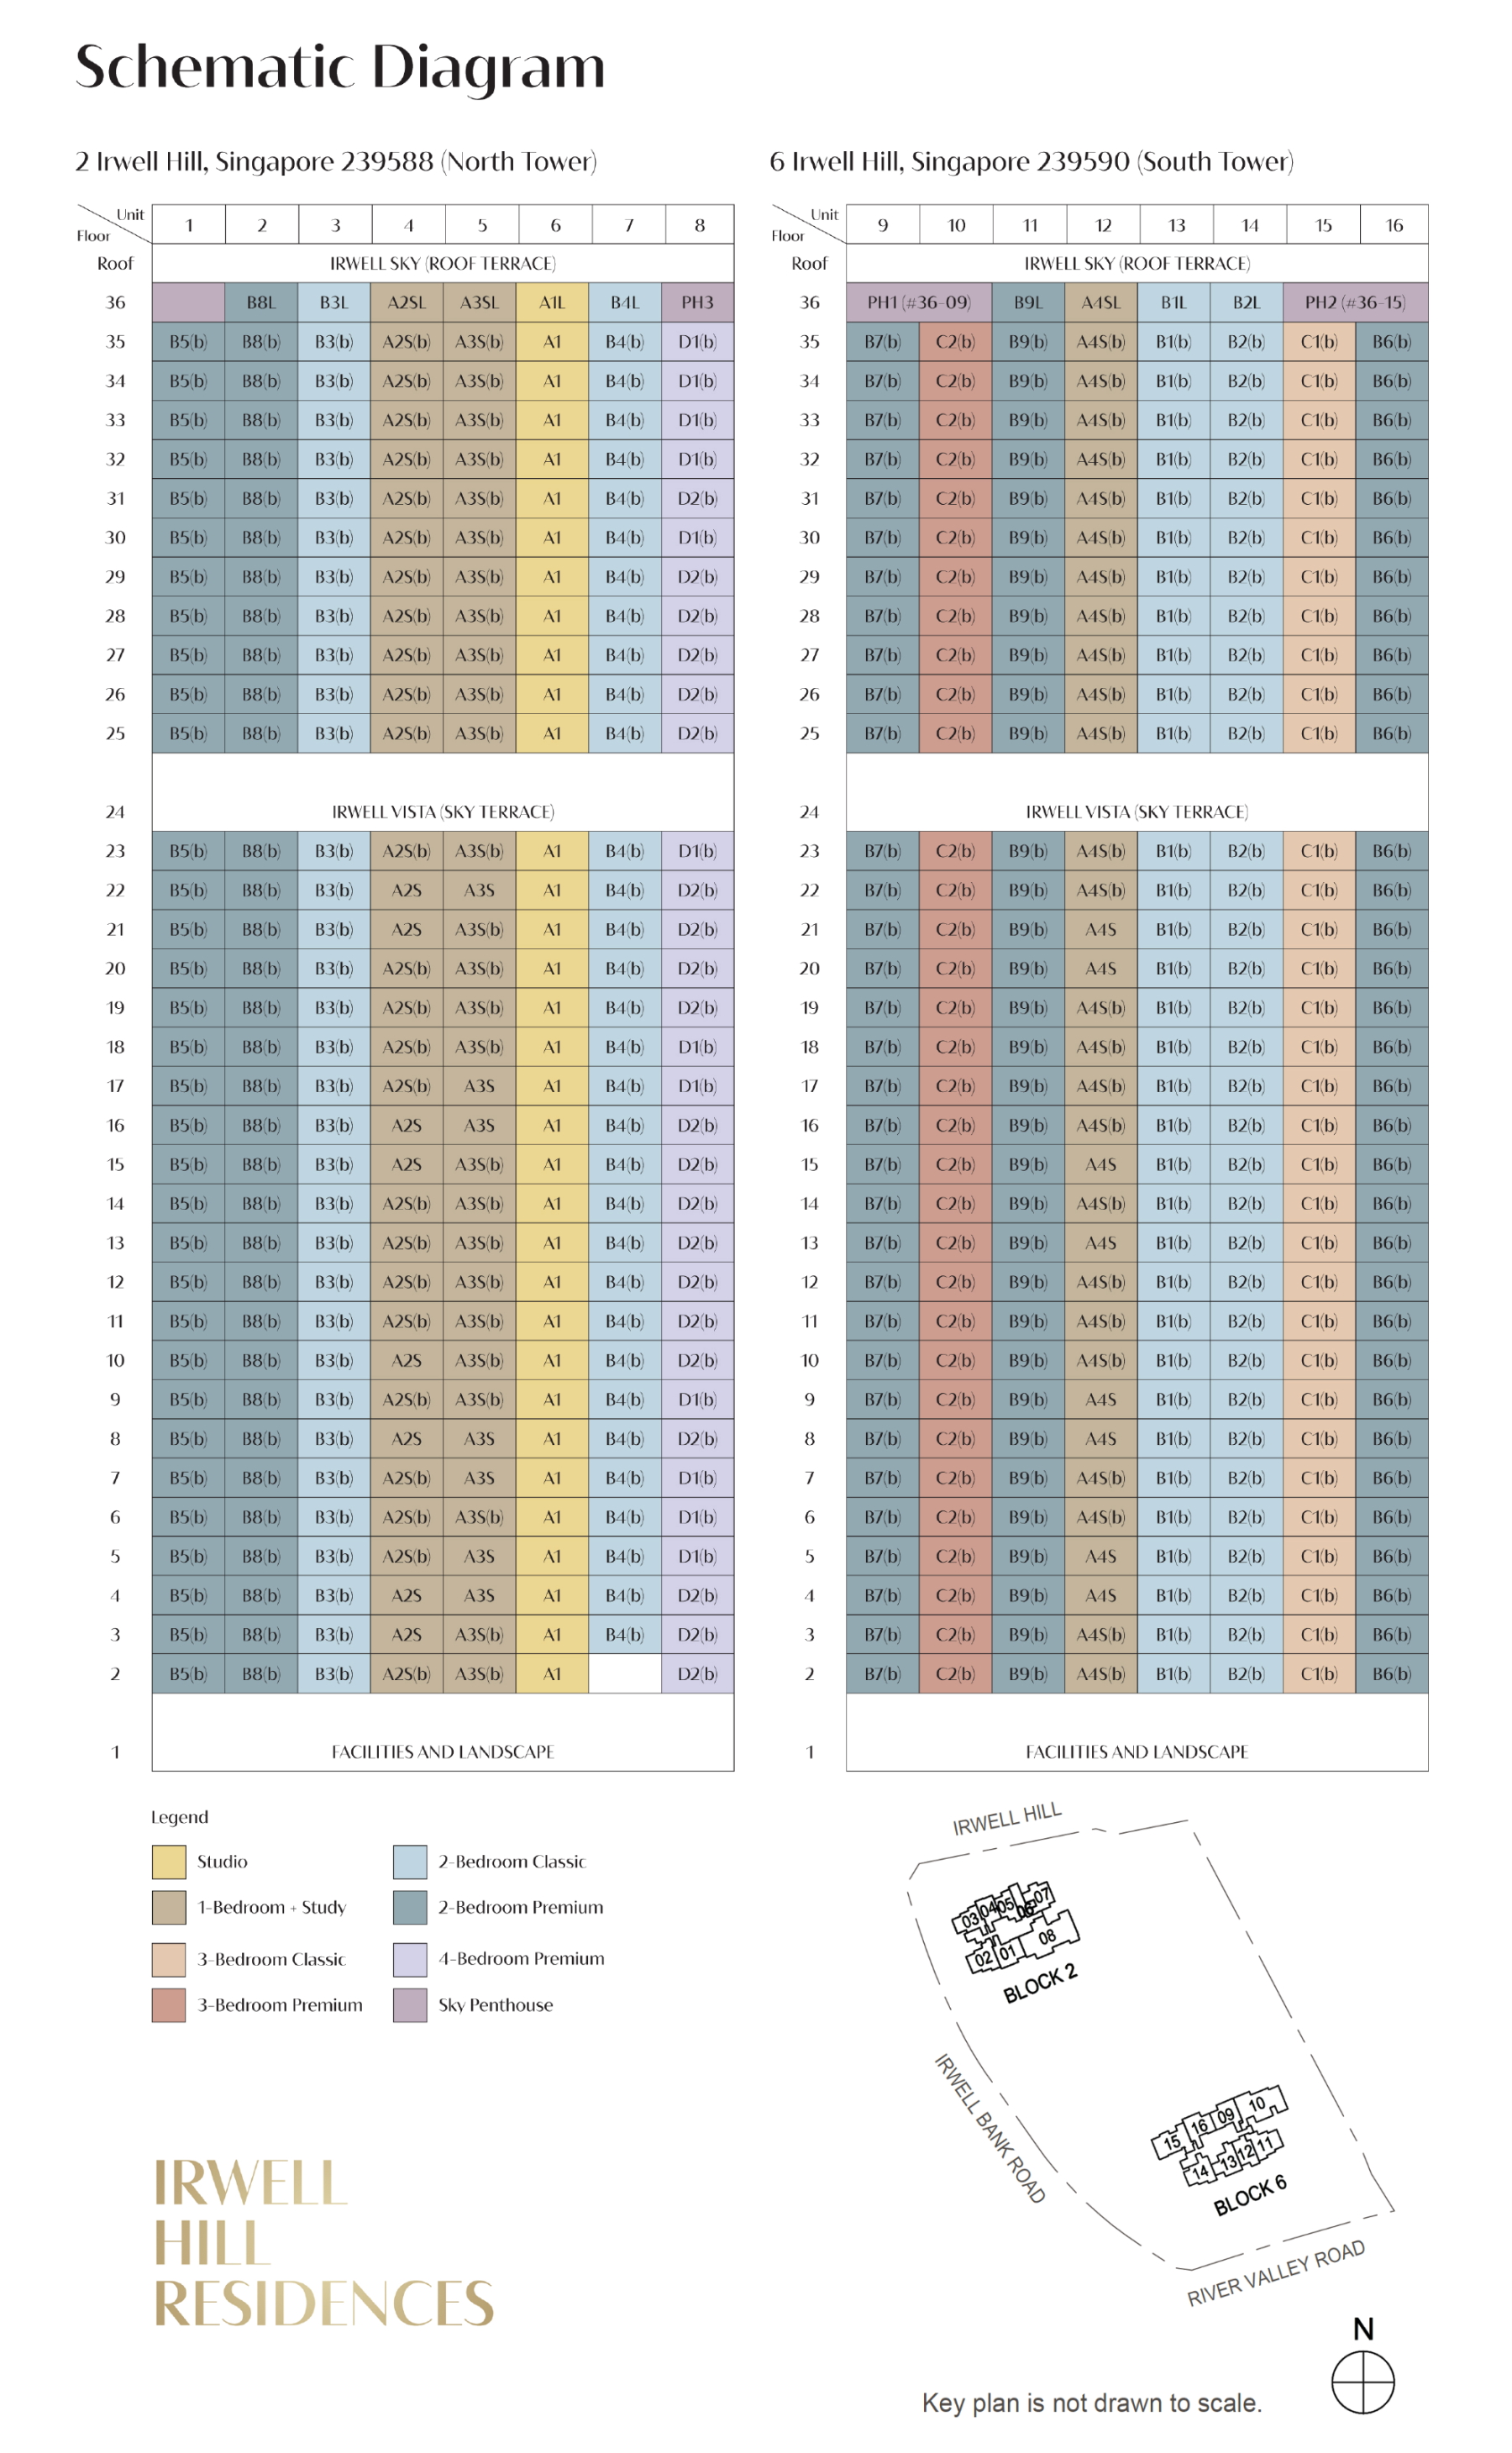 Irwell Hill Residences Elevation Chart